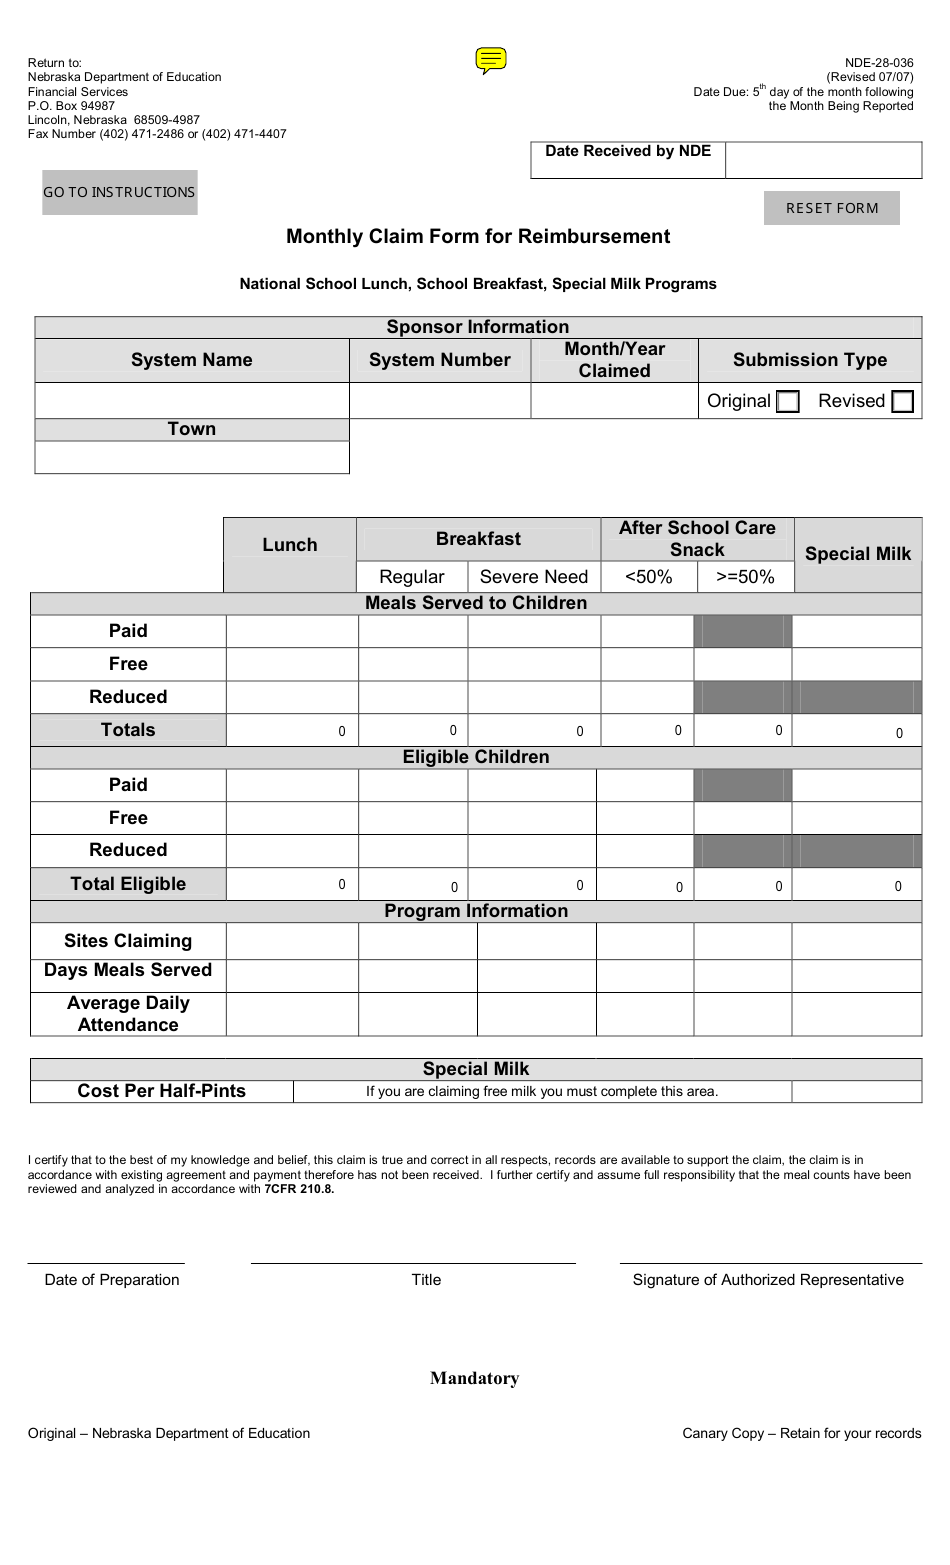 NDE Form 28-036 Monthly Claim Form for Reimbursement - Nebraska, Page 1